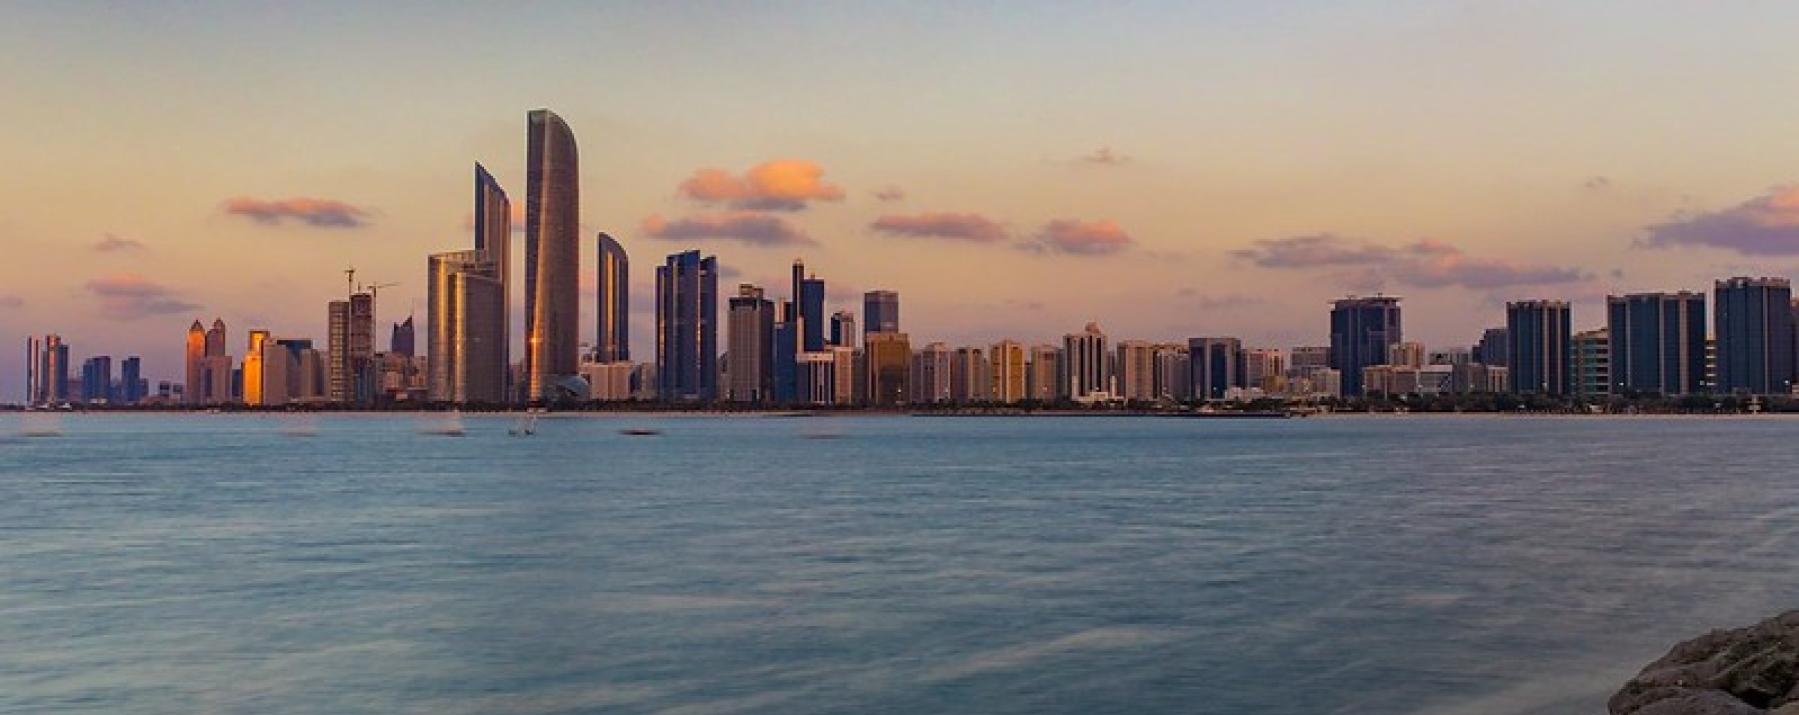 SSA Report cover - Abu Dhabi Skyline